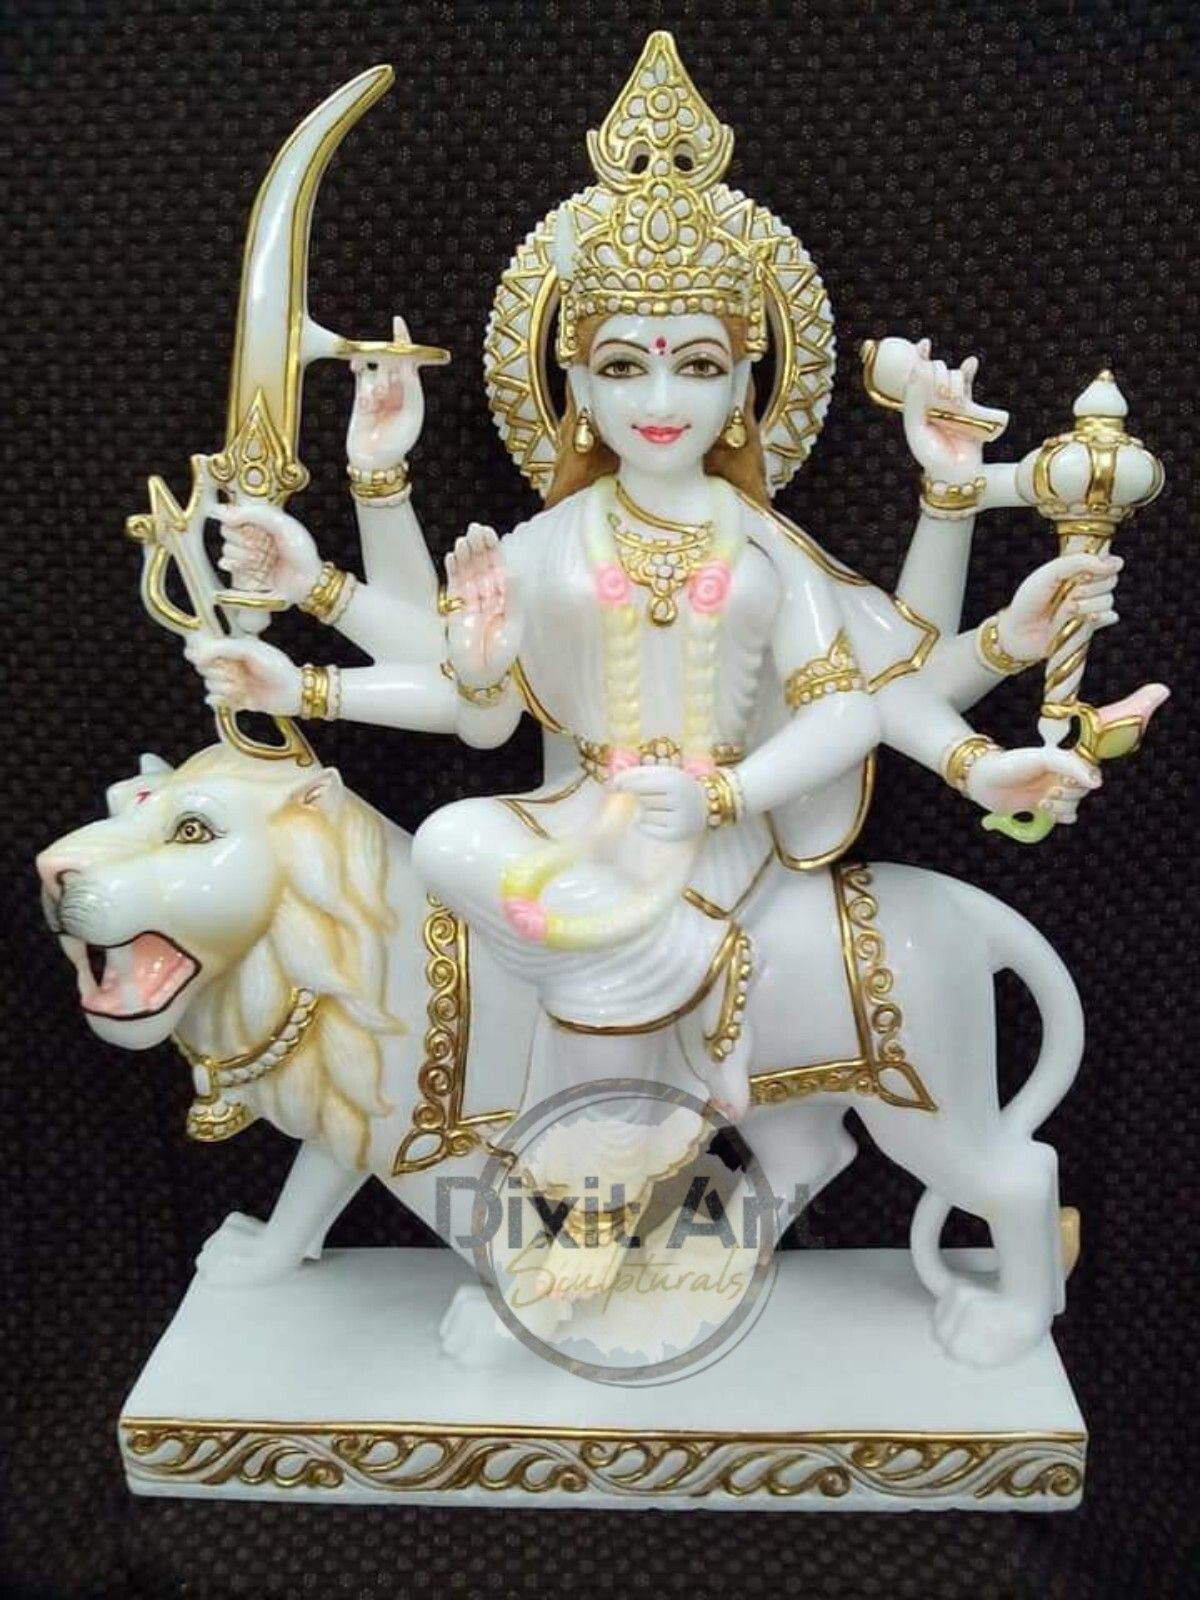 Marble Durga Mata Devi Statue